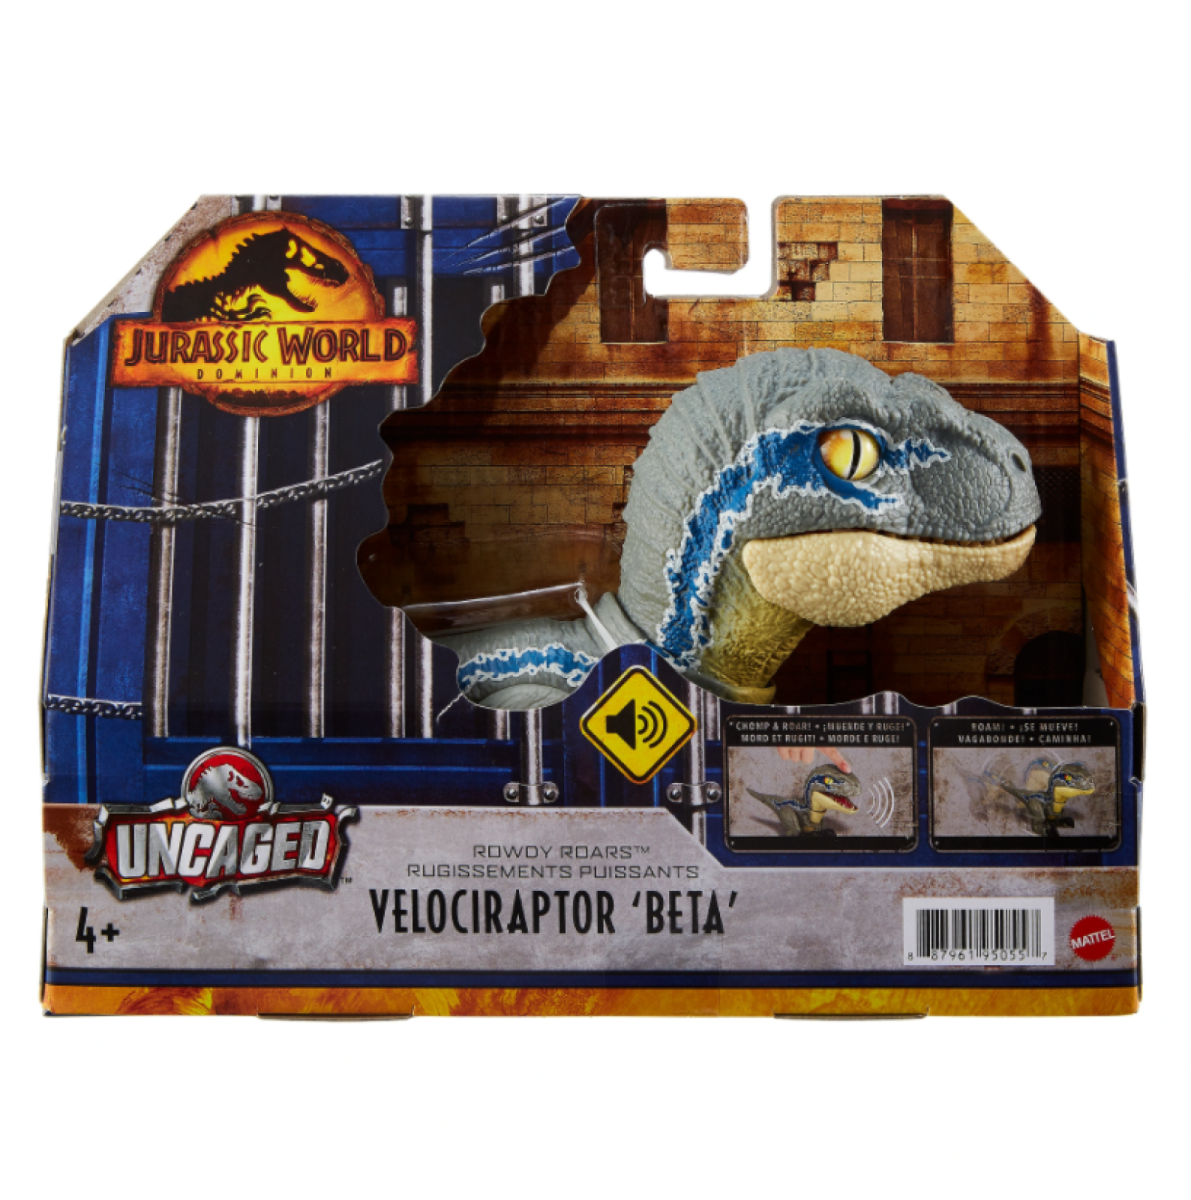 Jurassic World Velociraptor Beta